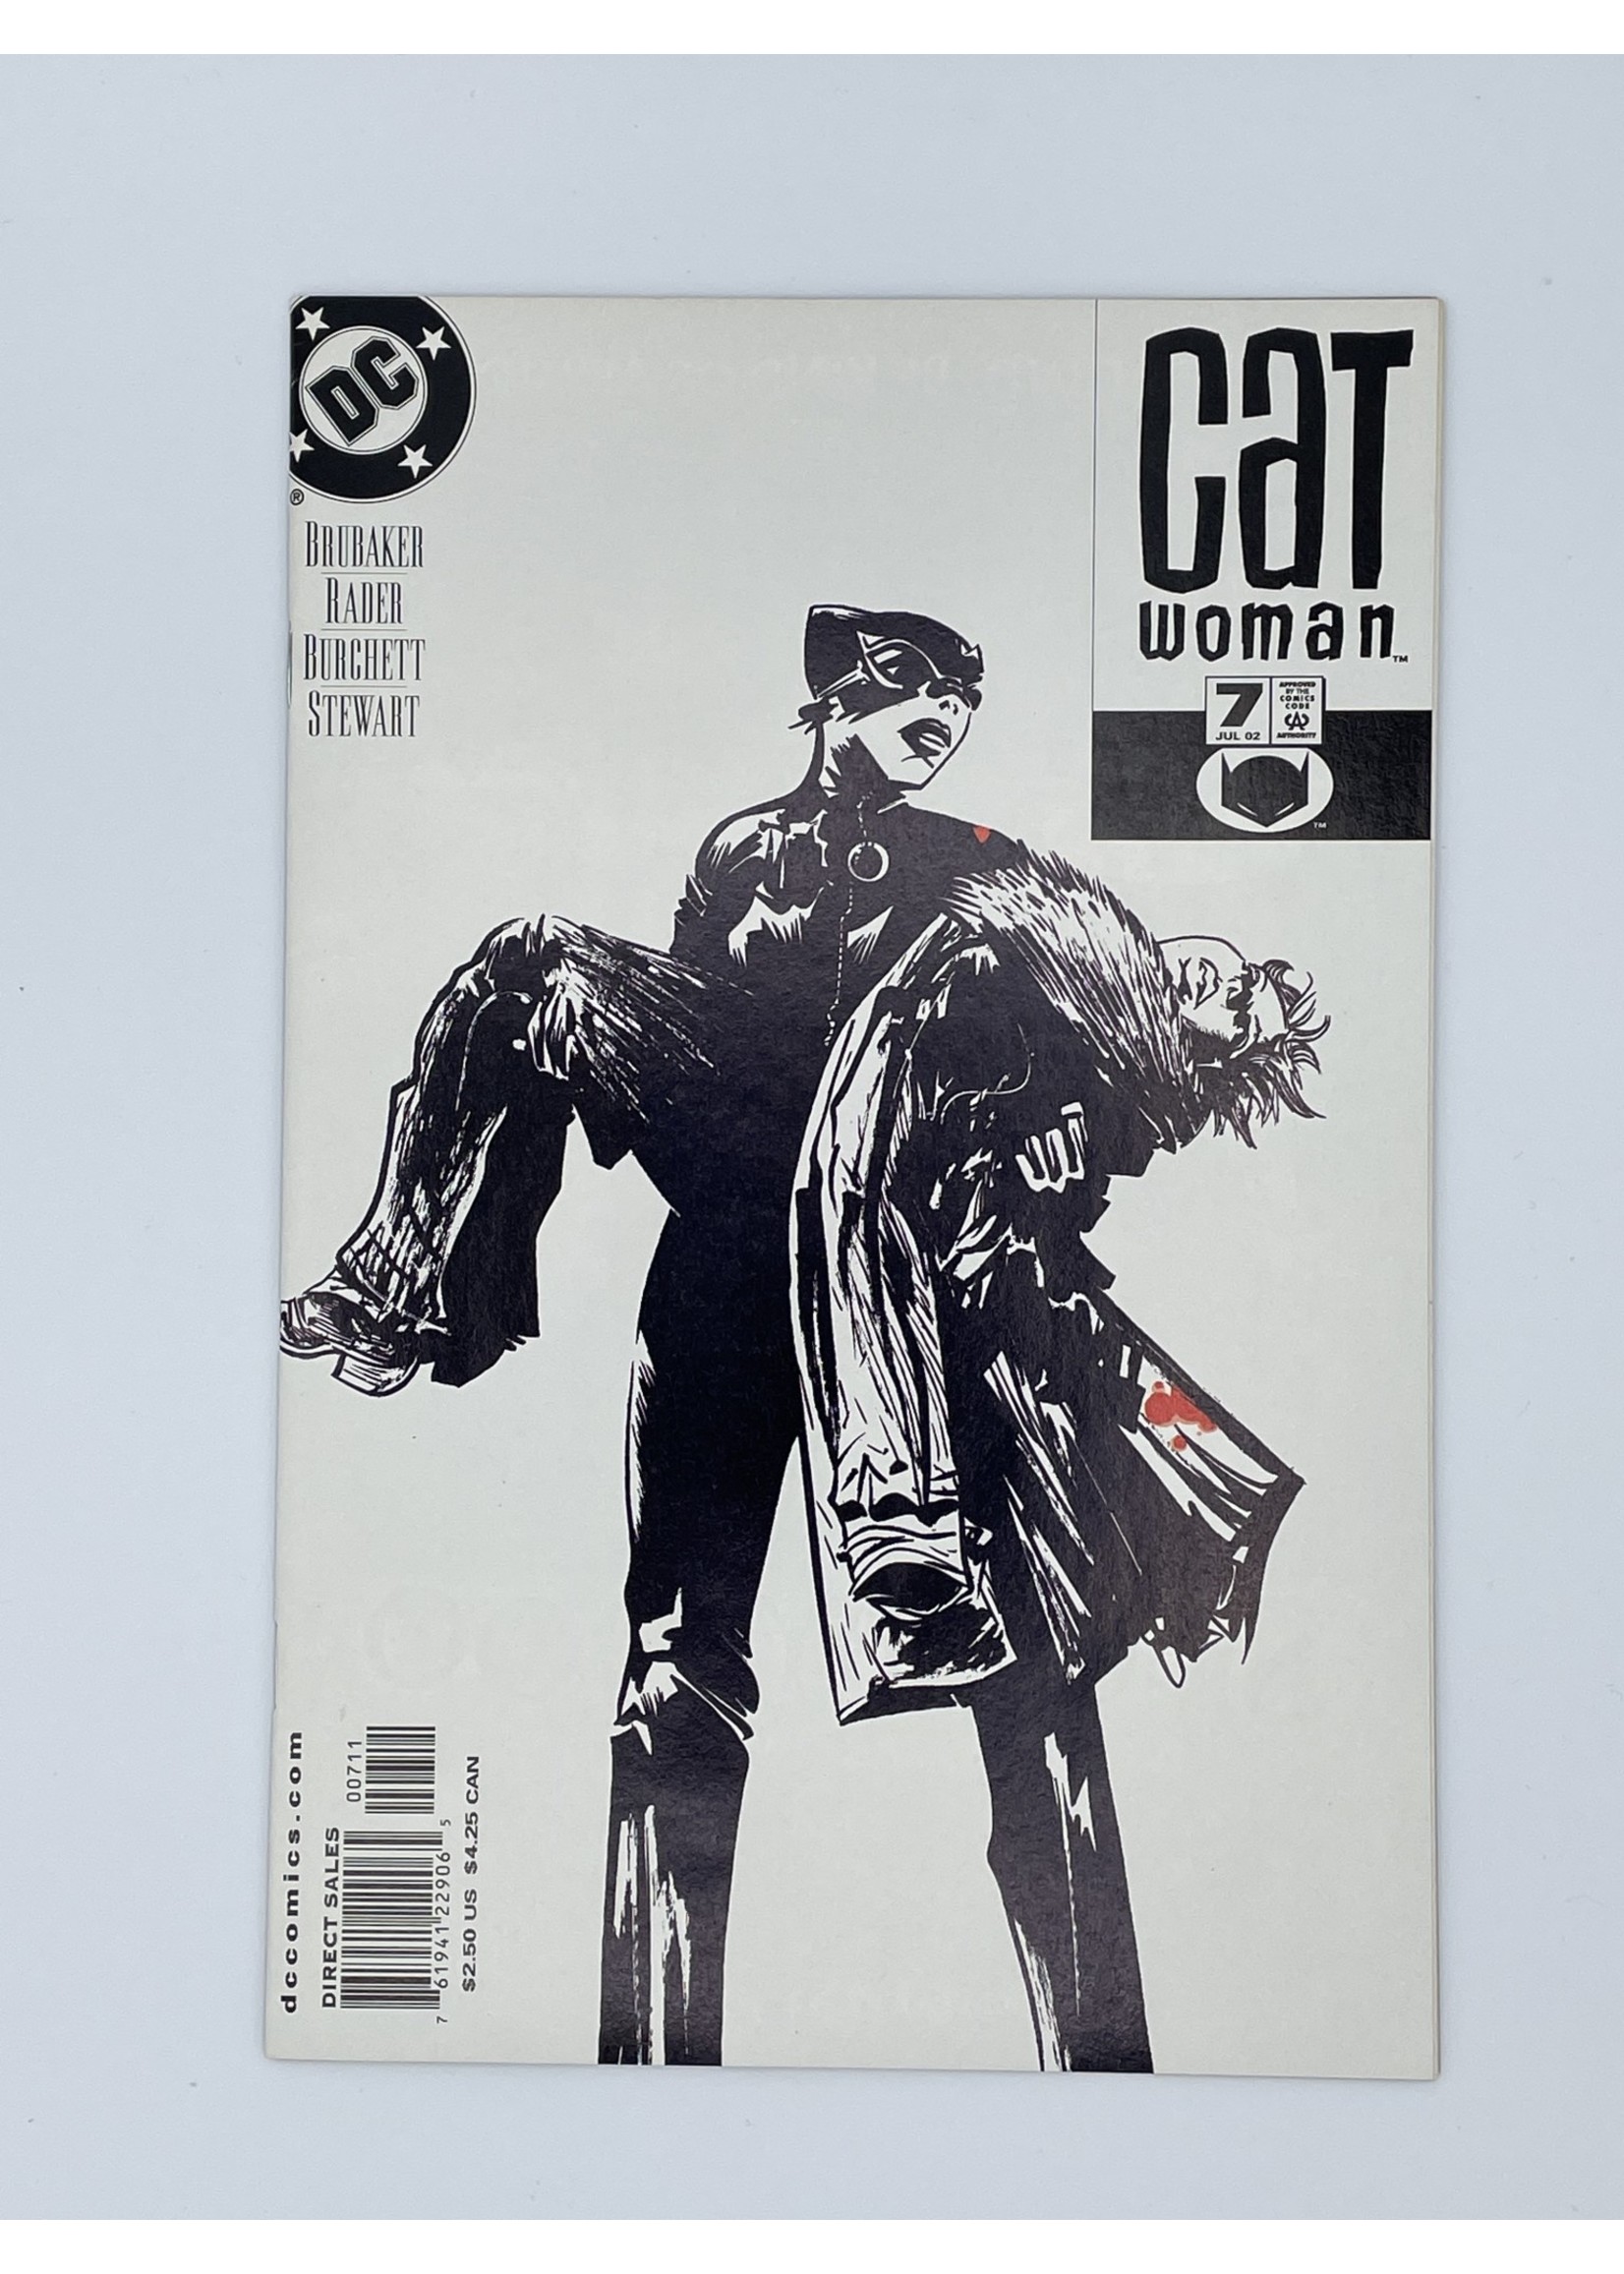 DC Catwoman #7 Dc July 2002